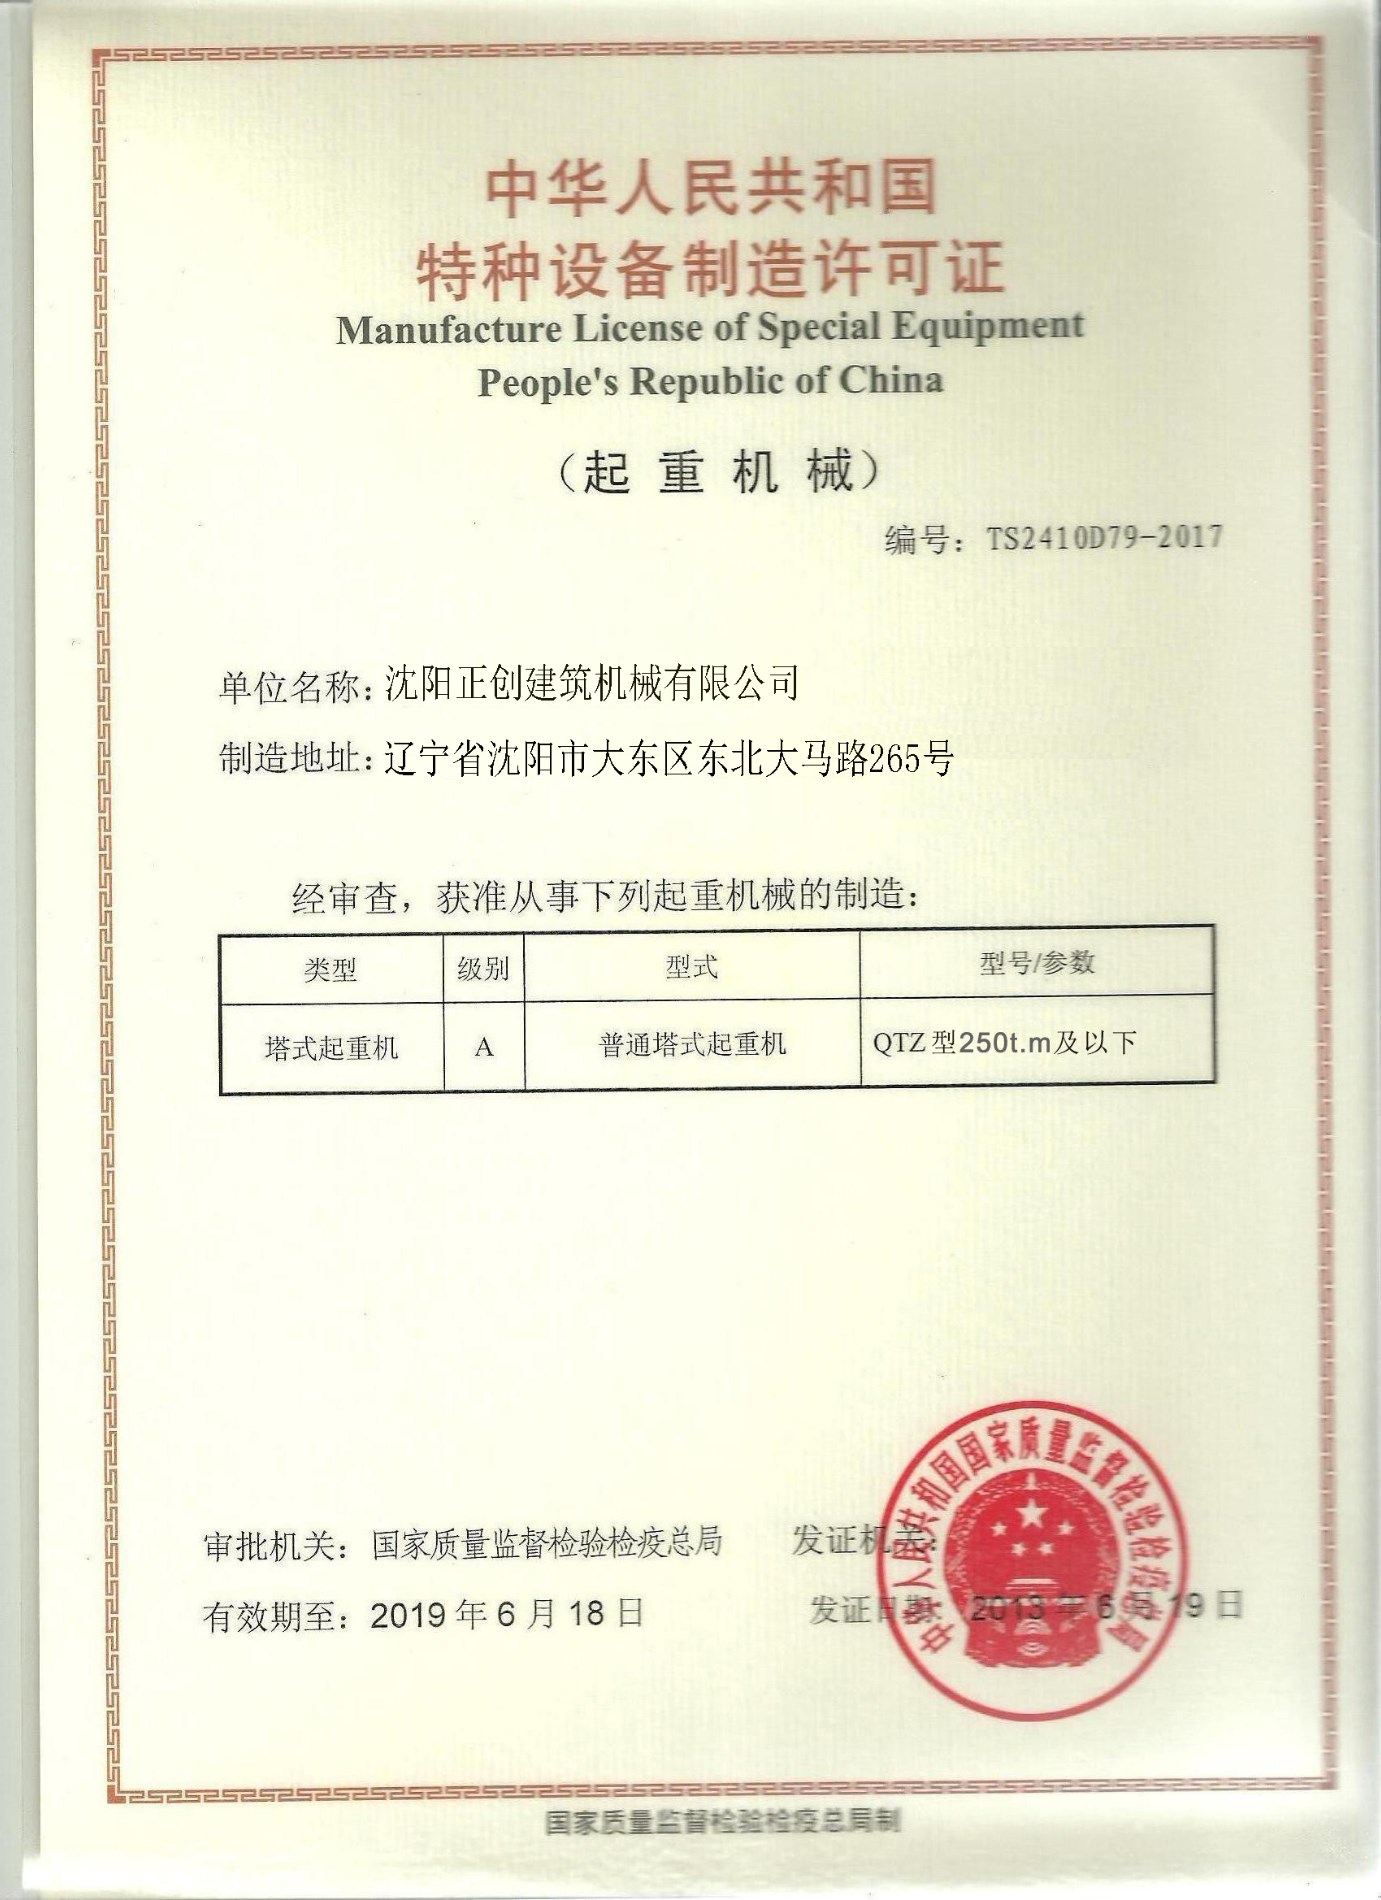 manufacture license